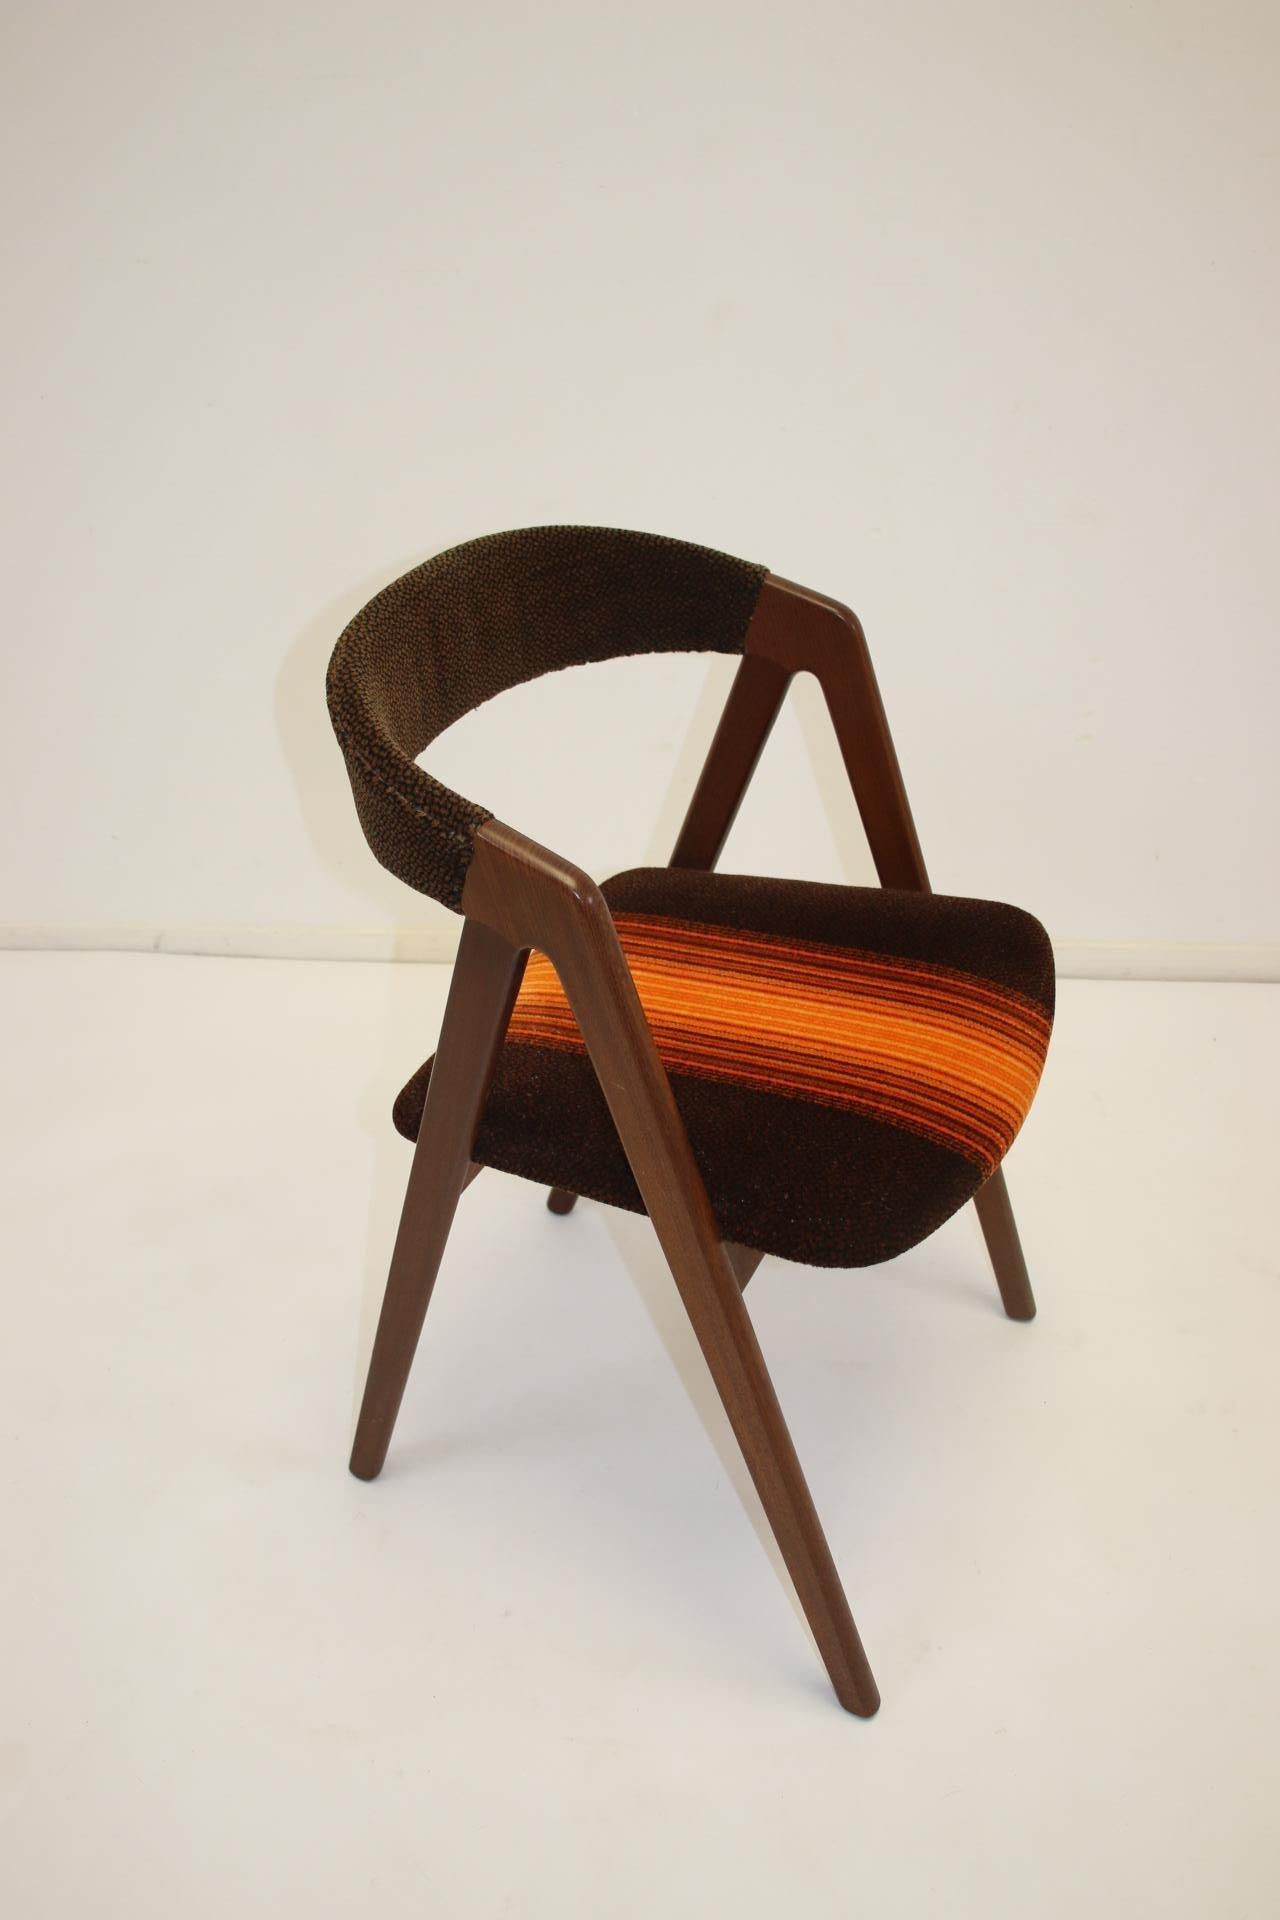 Mid-Century Modern Office Chair Danish Design with Brown/Orange Fabric